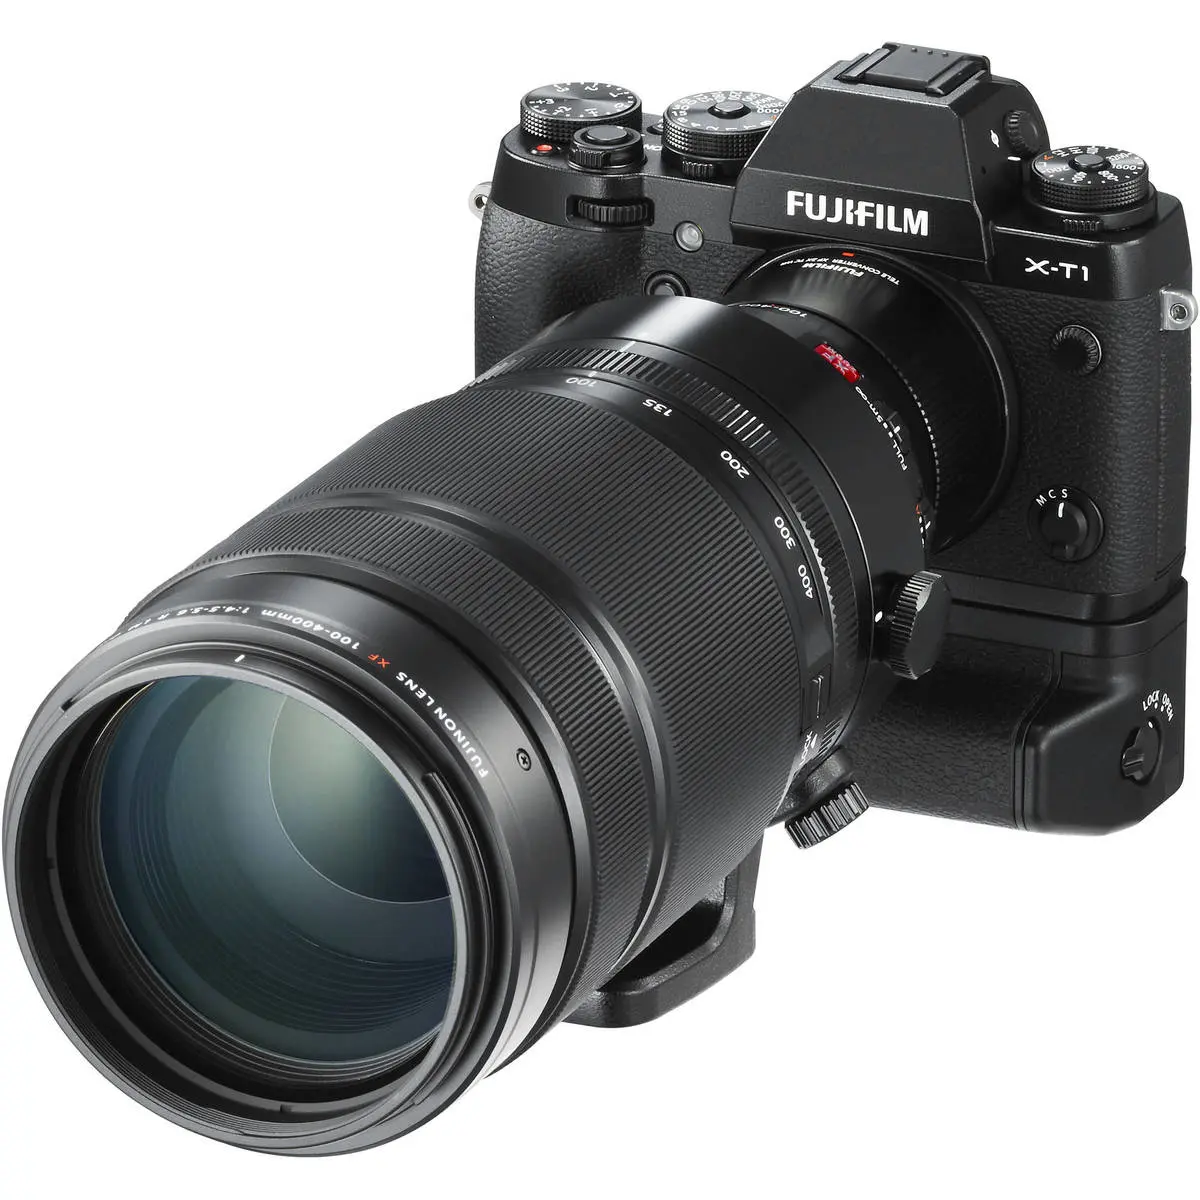 3. Fujifilm FUJINON XF 2X TC WR Teleconverter Lens